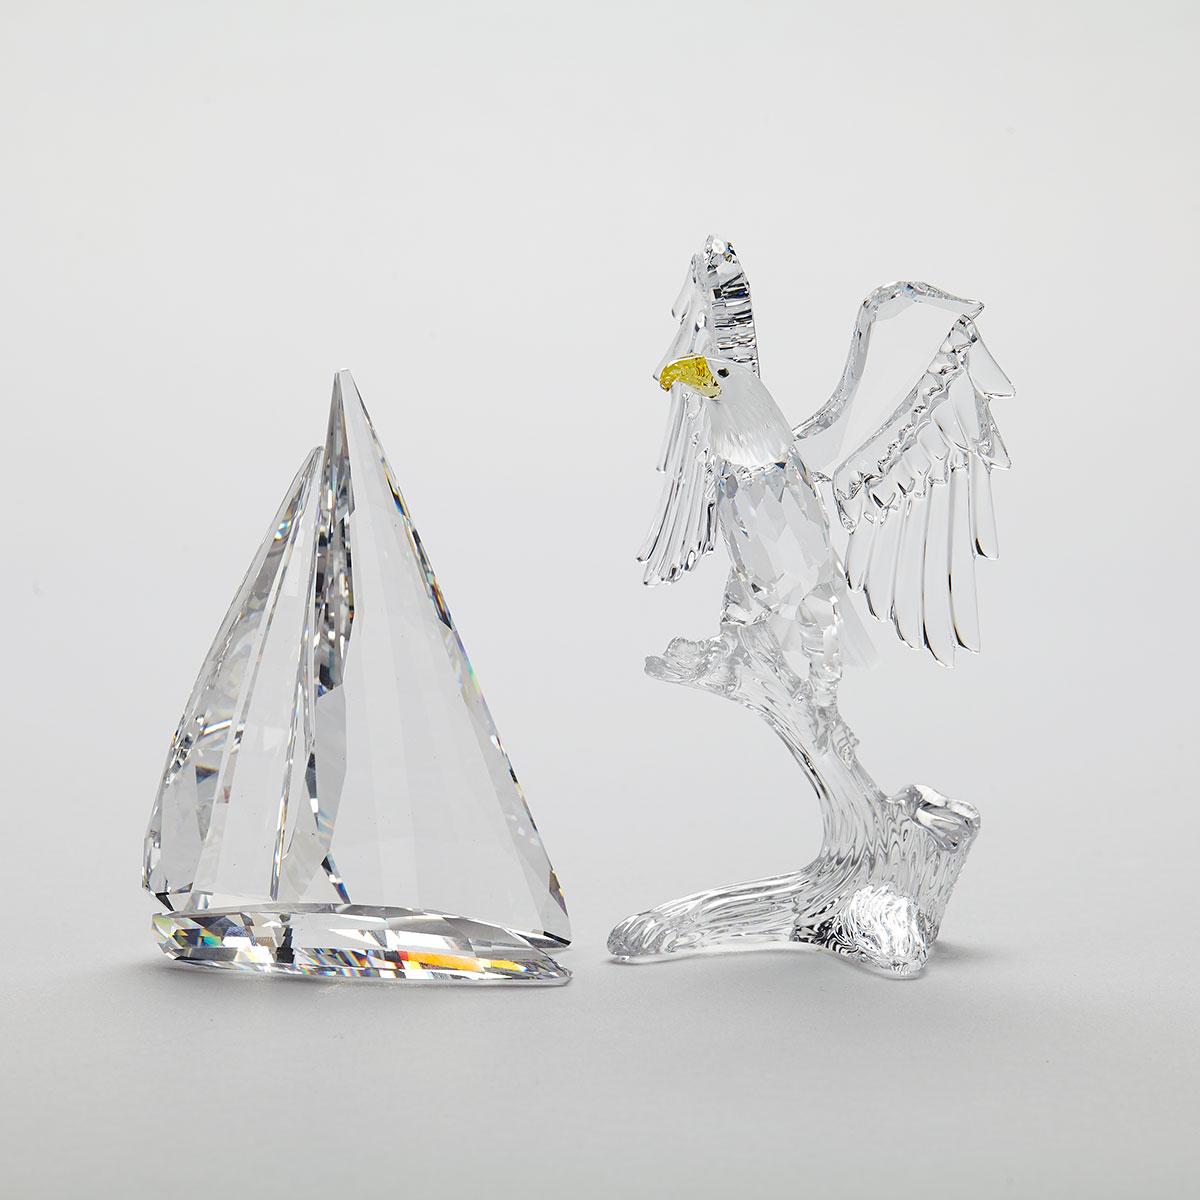 Swarovski Crystal Bald Eagle and Sailboat, 2000/03